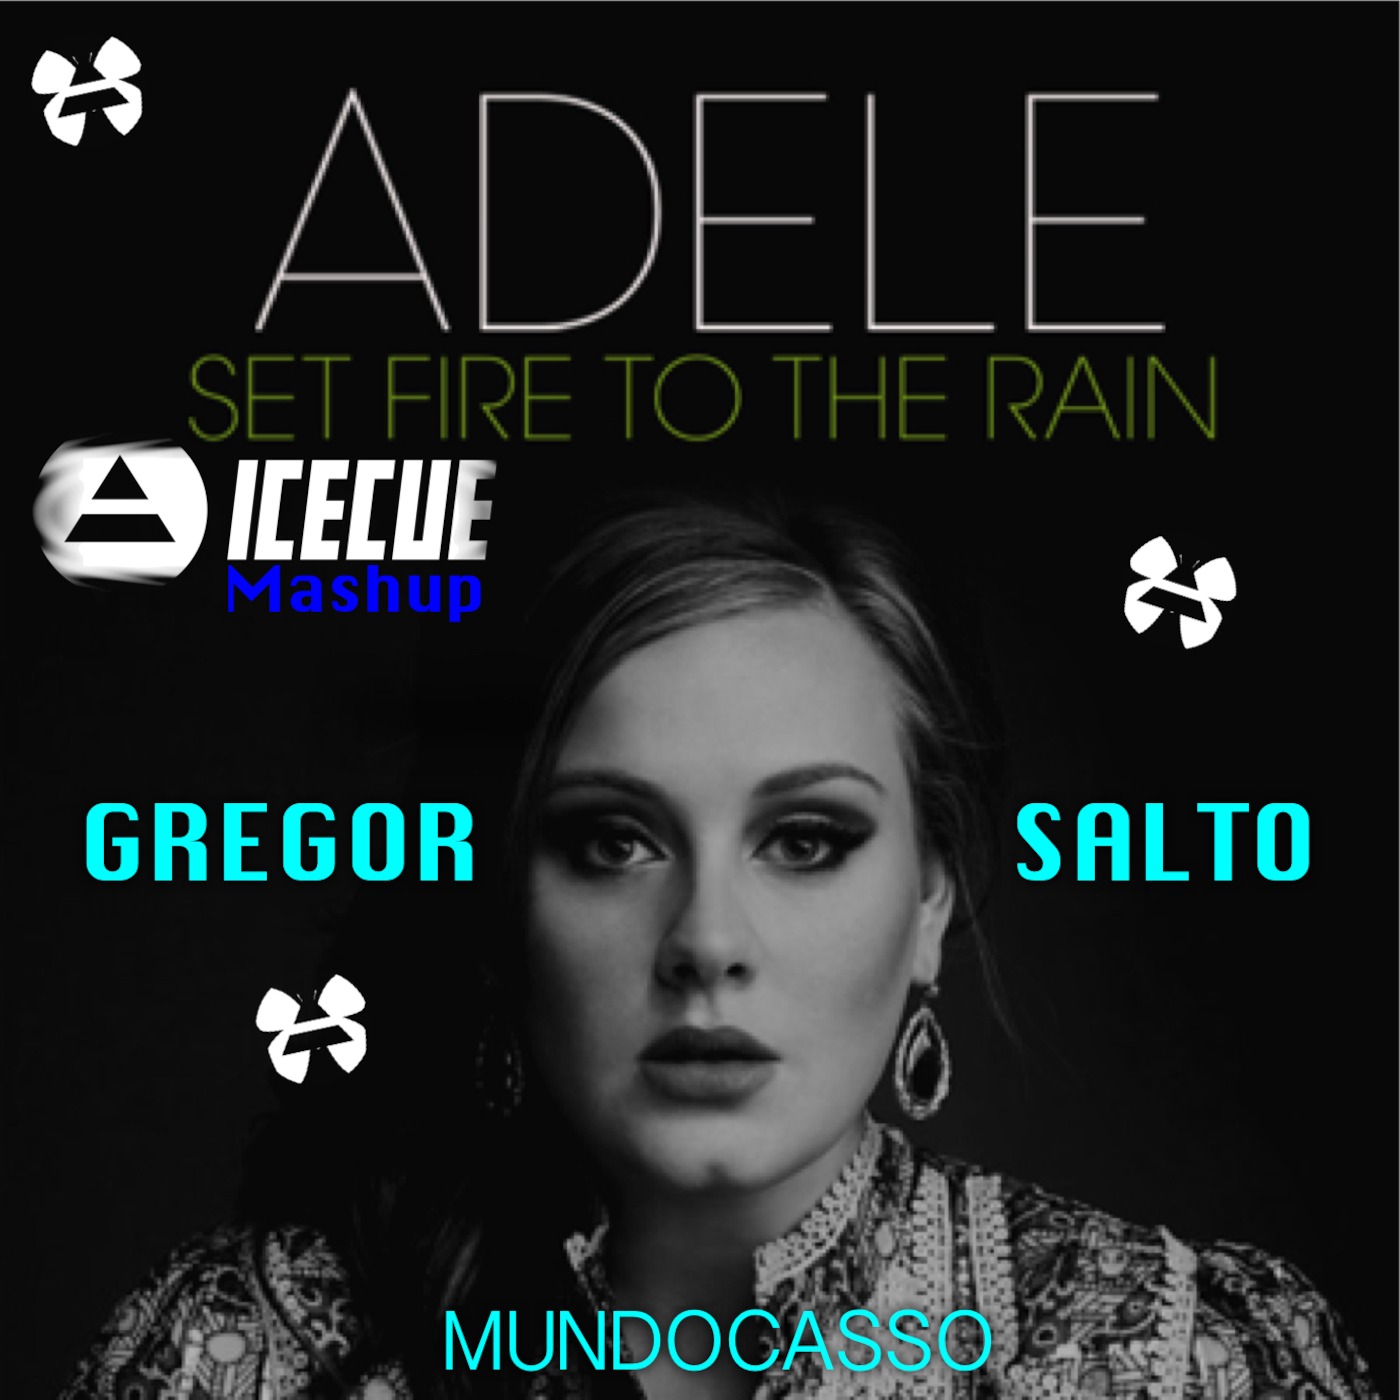 To the rain adele перевод. Adele vs Linkin Park Set Fire to the end Pulga Mashup.